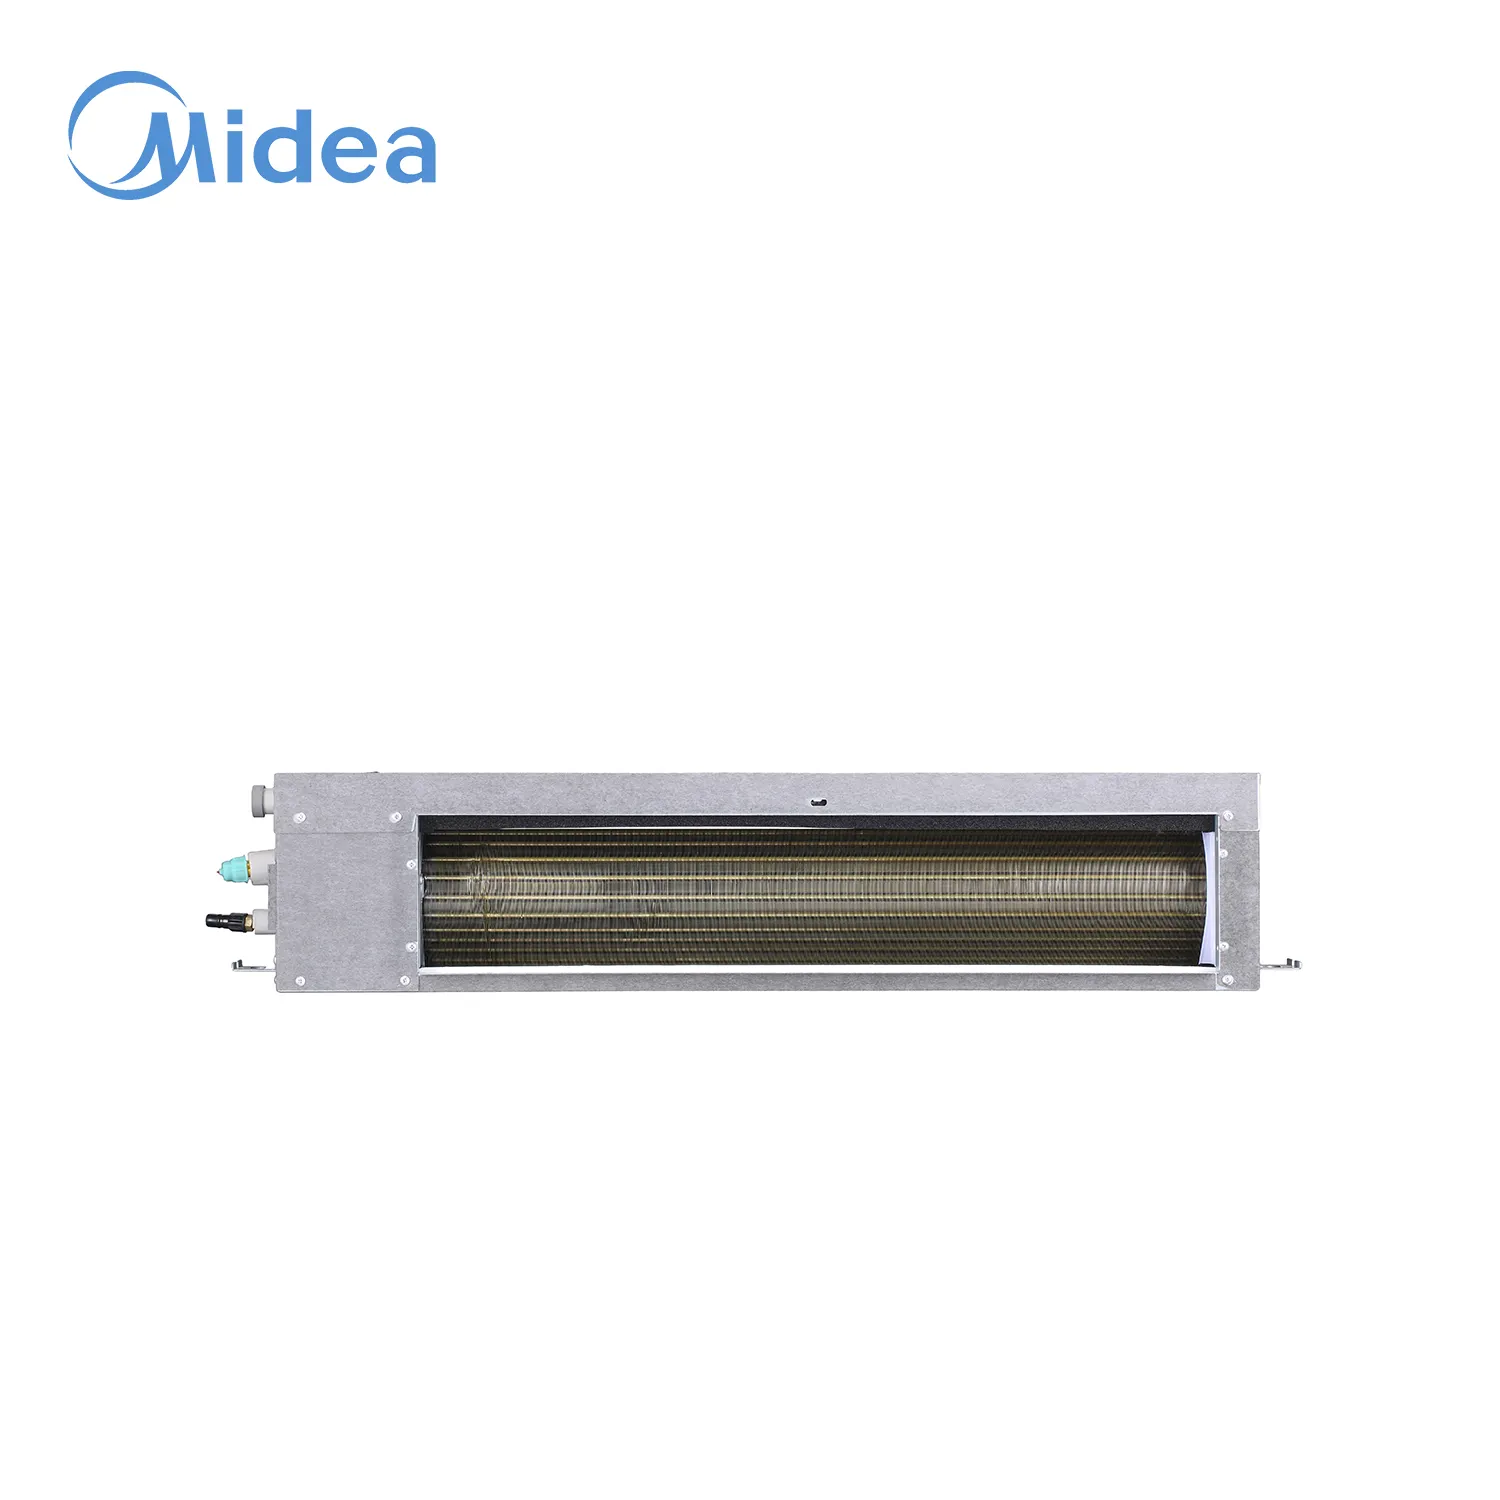 Midea brand multi-split AC unit Healthy air supply 2.2kw 7.5kbtu Arc Duct DC inverter R410A smart air conditioner for Hospitals